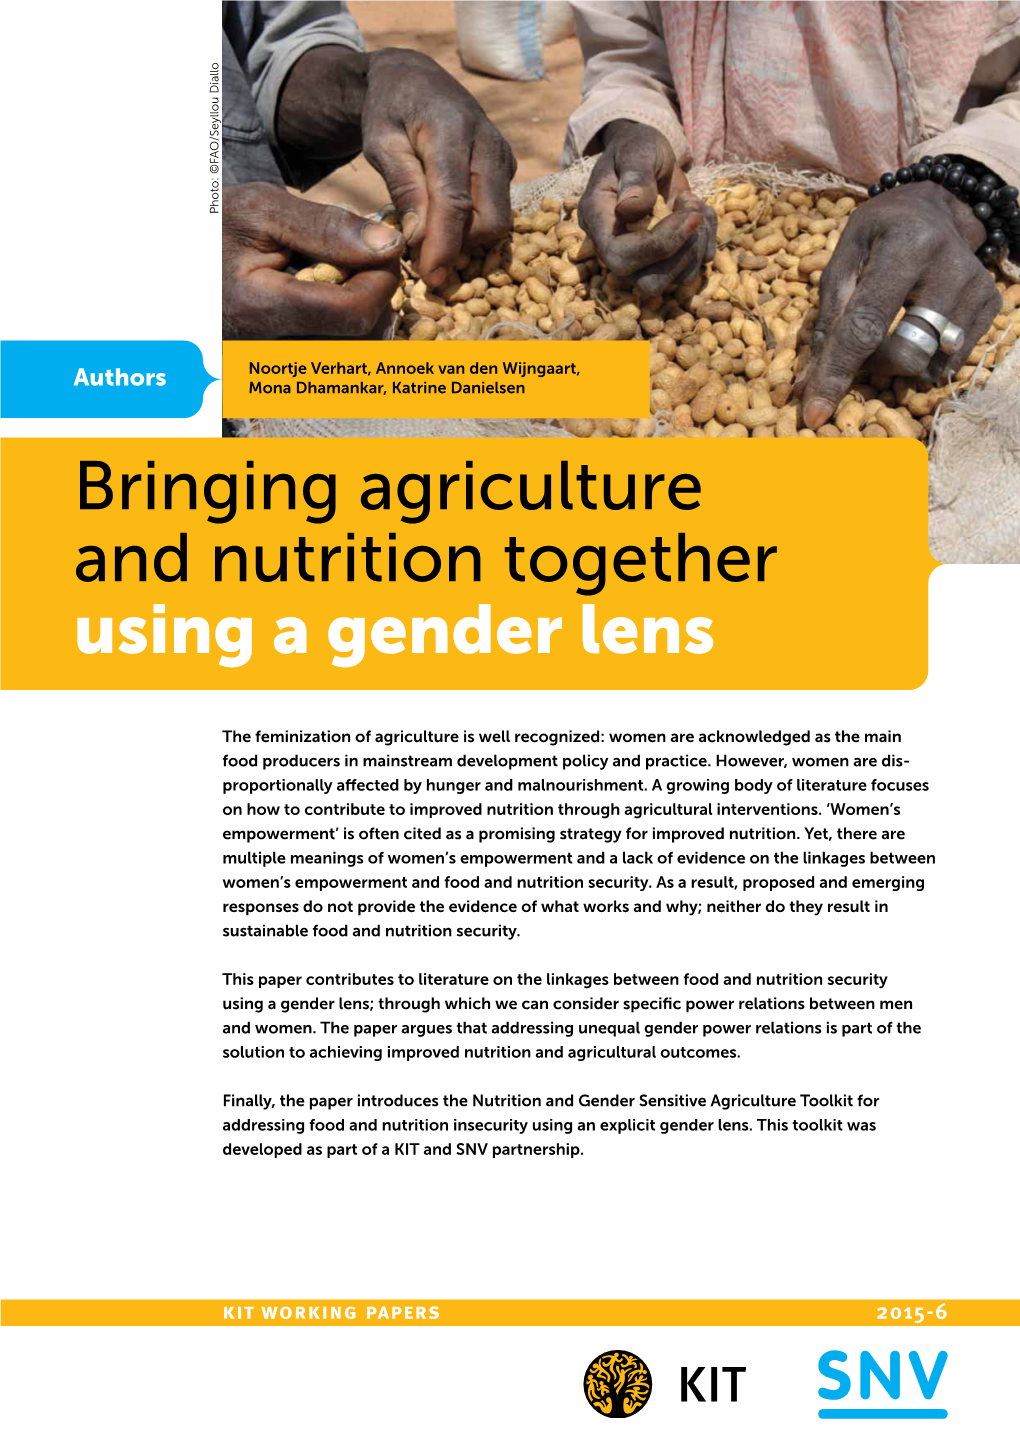 Bringing Agriculture and Nutrition Together Using a Gender Lens